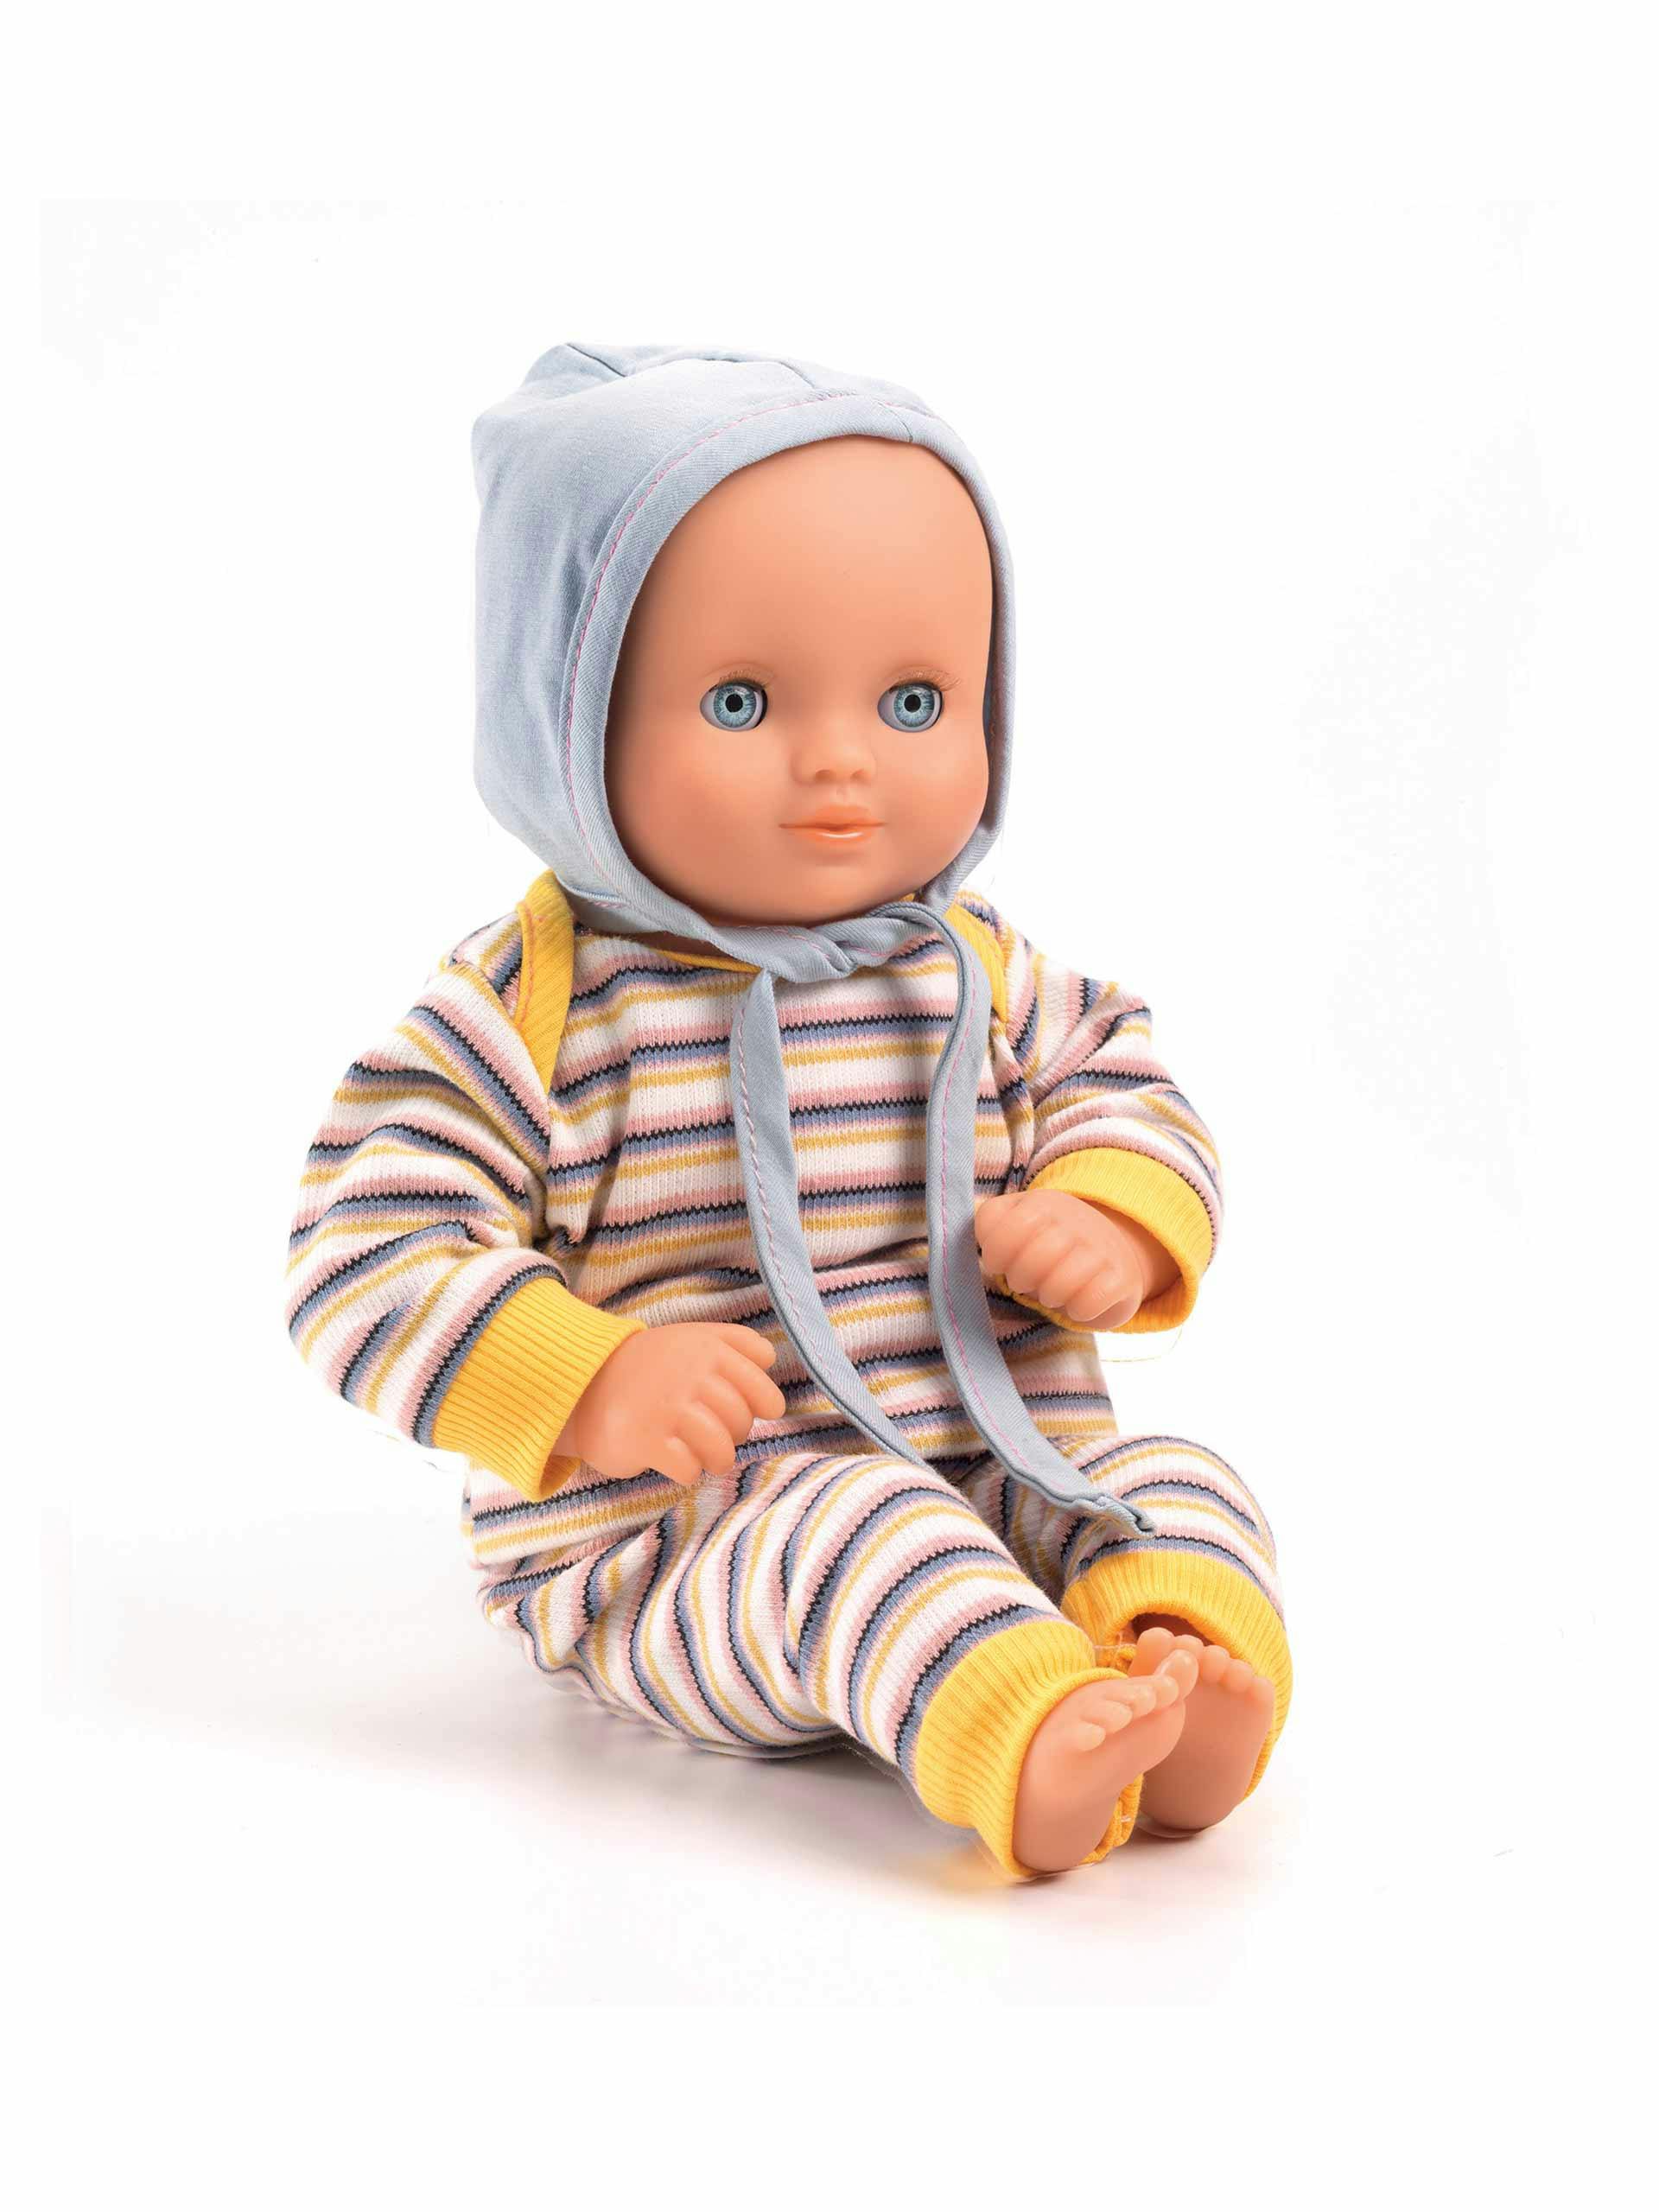 Soft baby doll